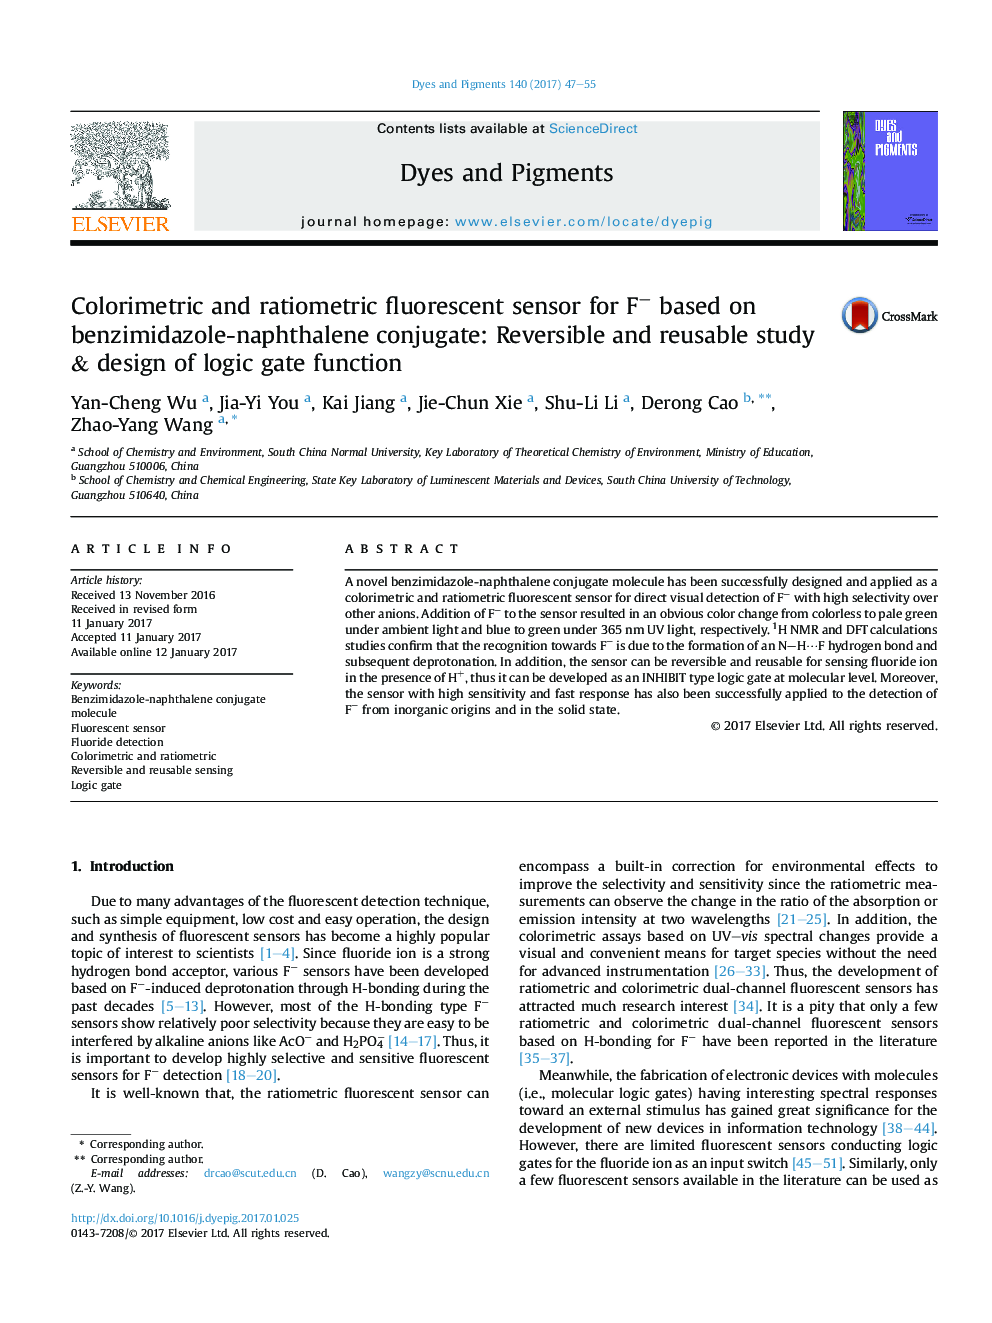 Colorimetric and ratiometric fluorescent sensor for Fâ based on benzimidazole-naphthalene conjugate: Reversible and reusable study & design of logic gate function